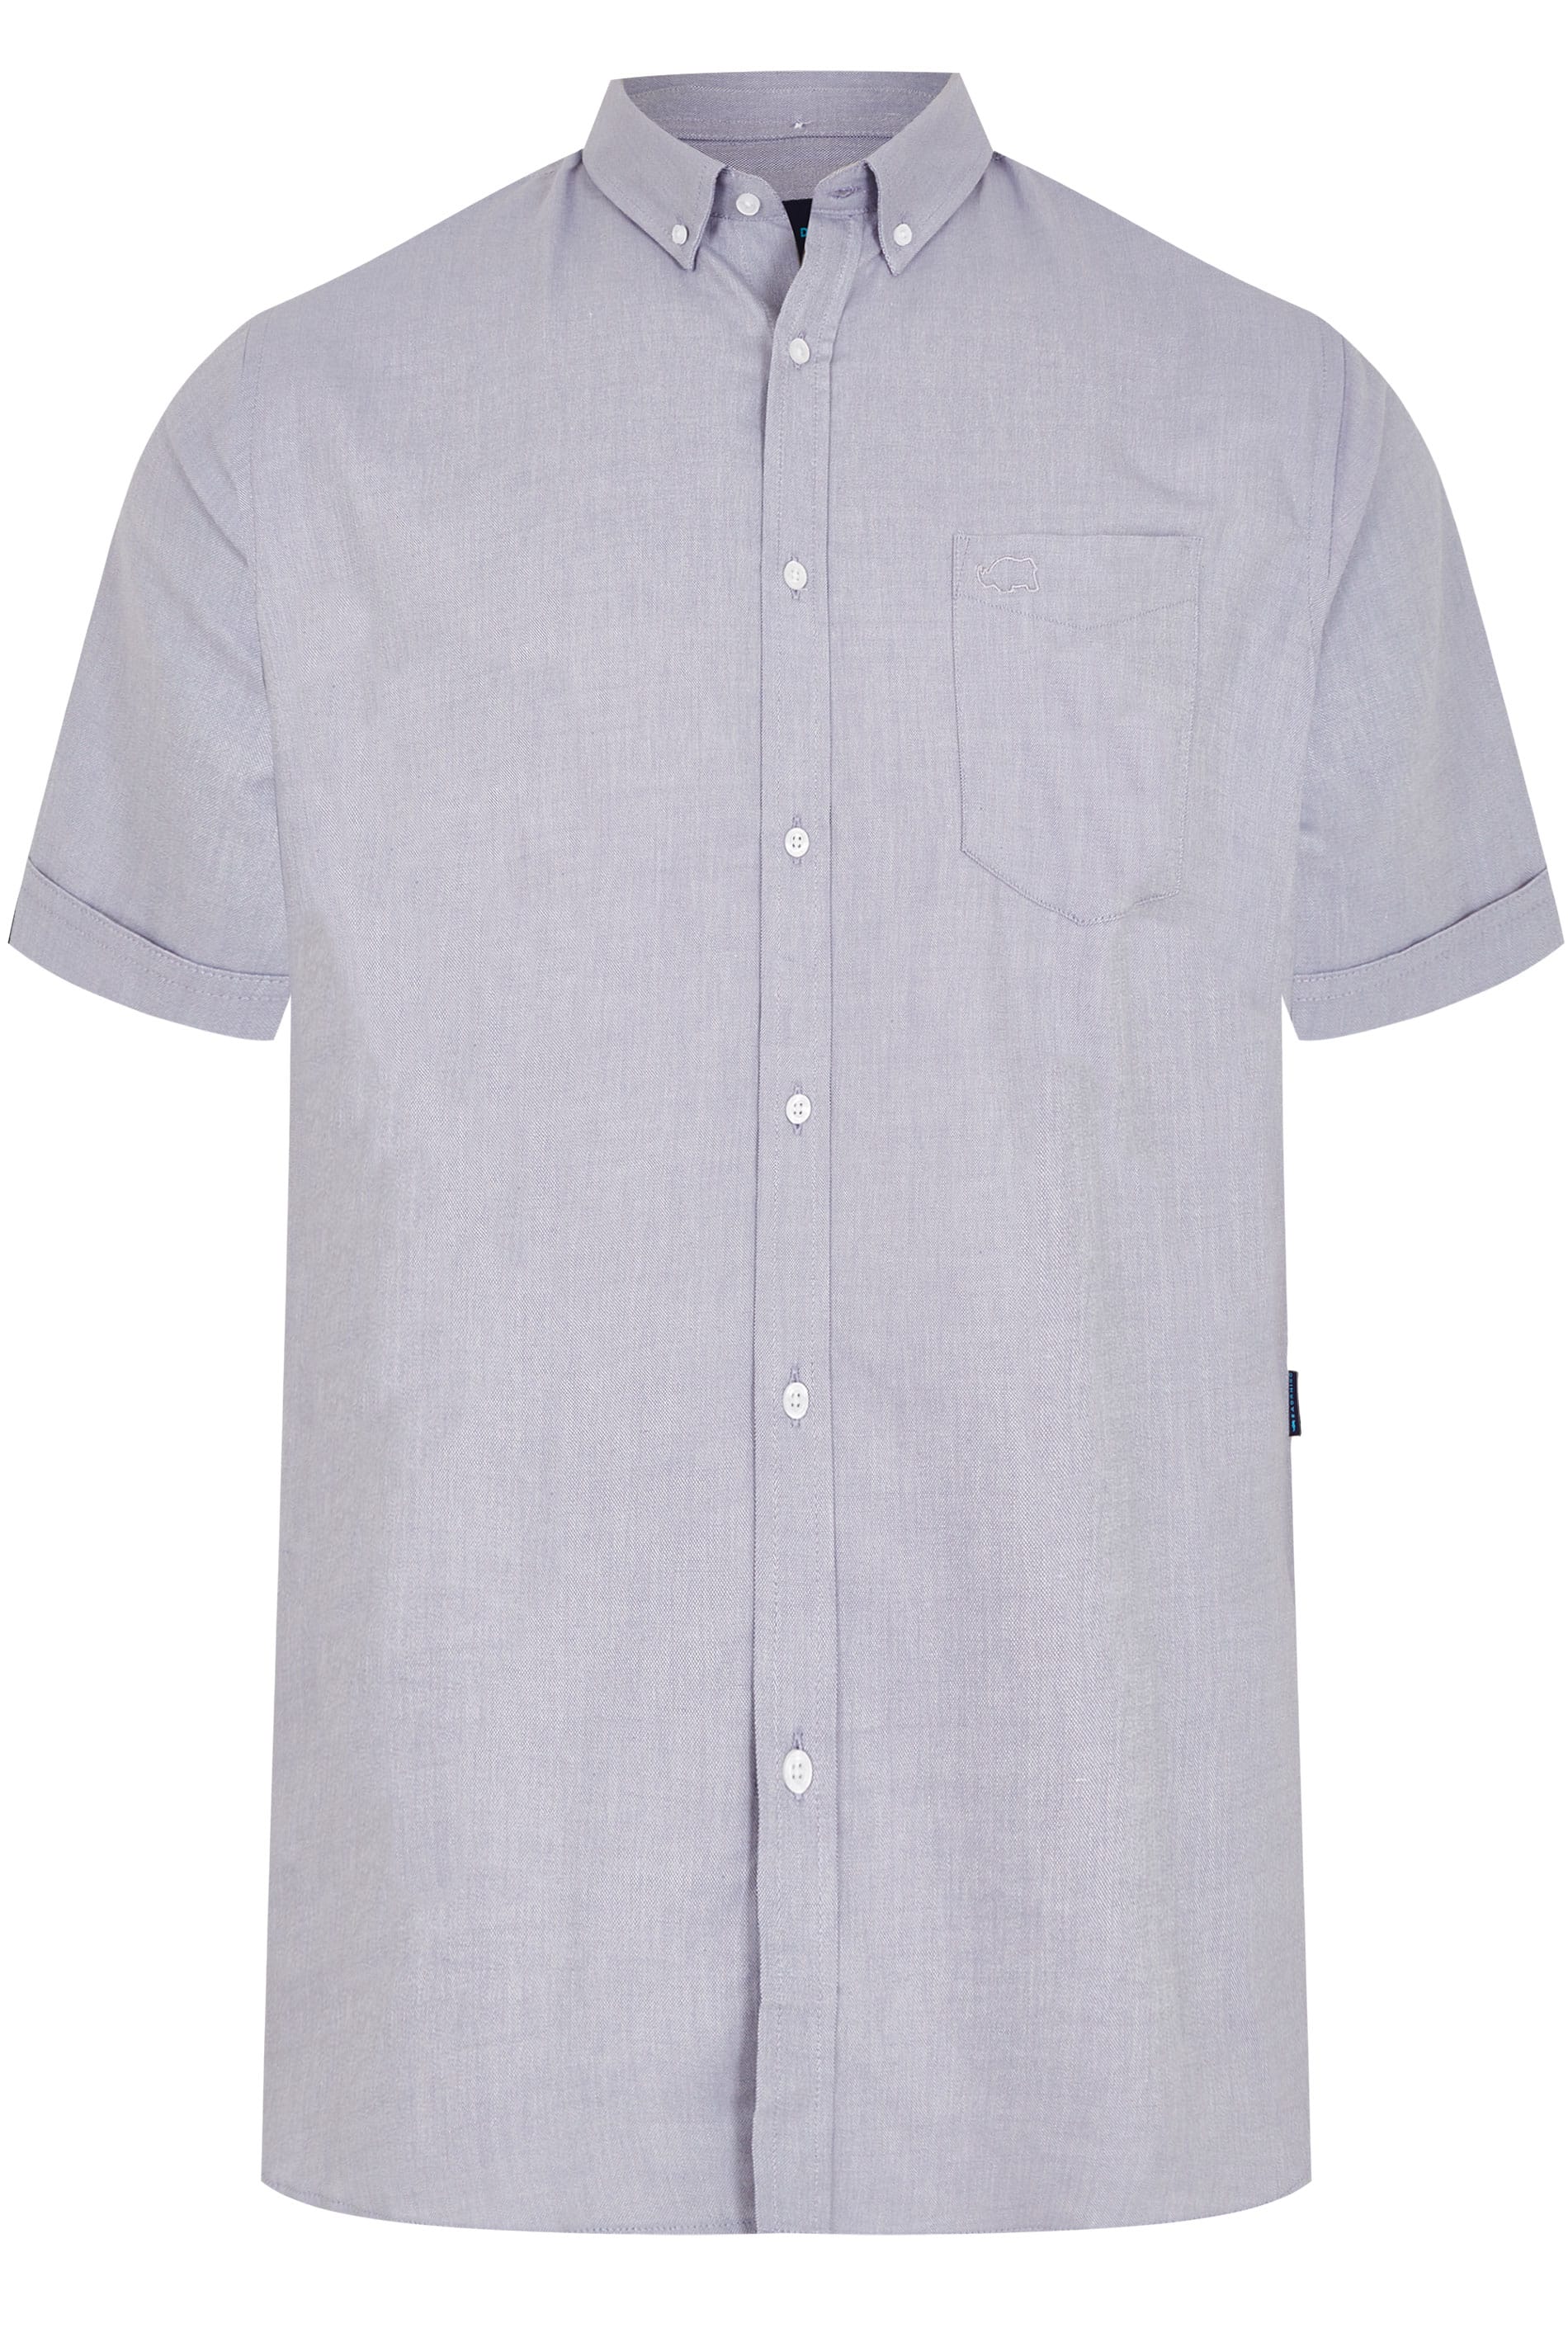 BadRhino Blue Cotton Short Sleeved Oxford Shirt Extra large sizes L to 8XL